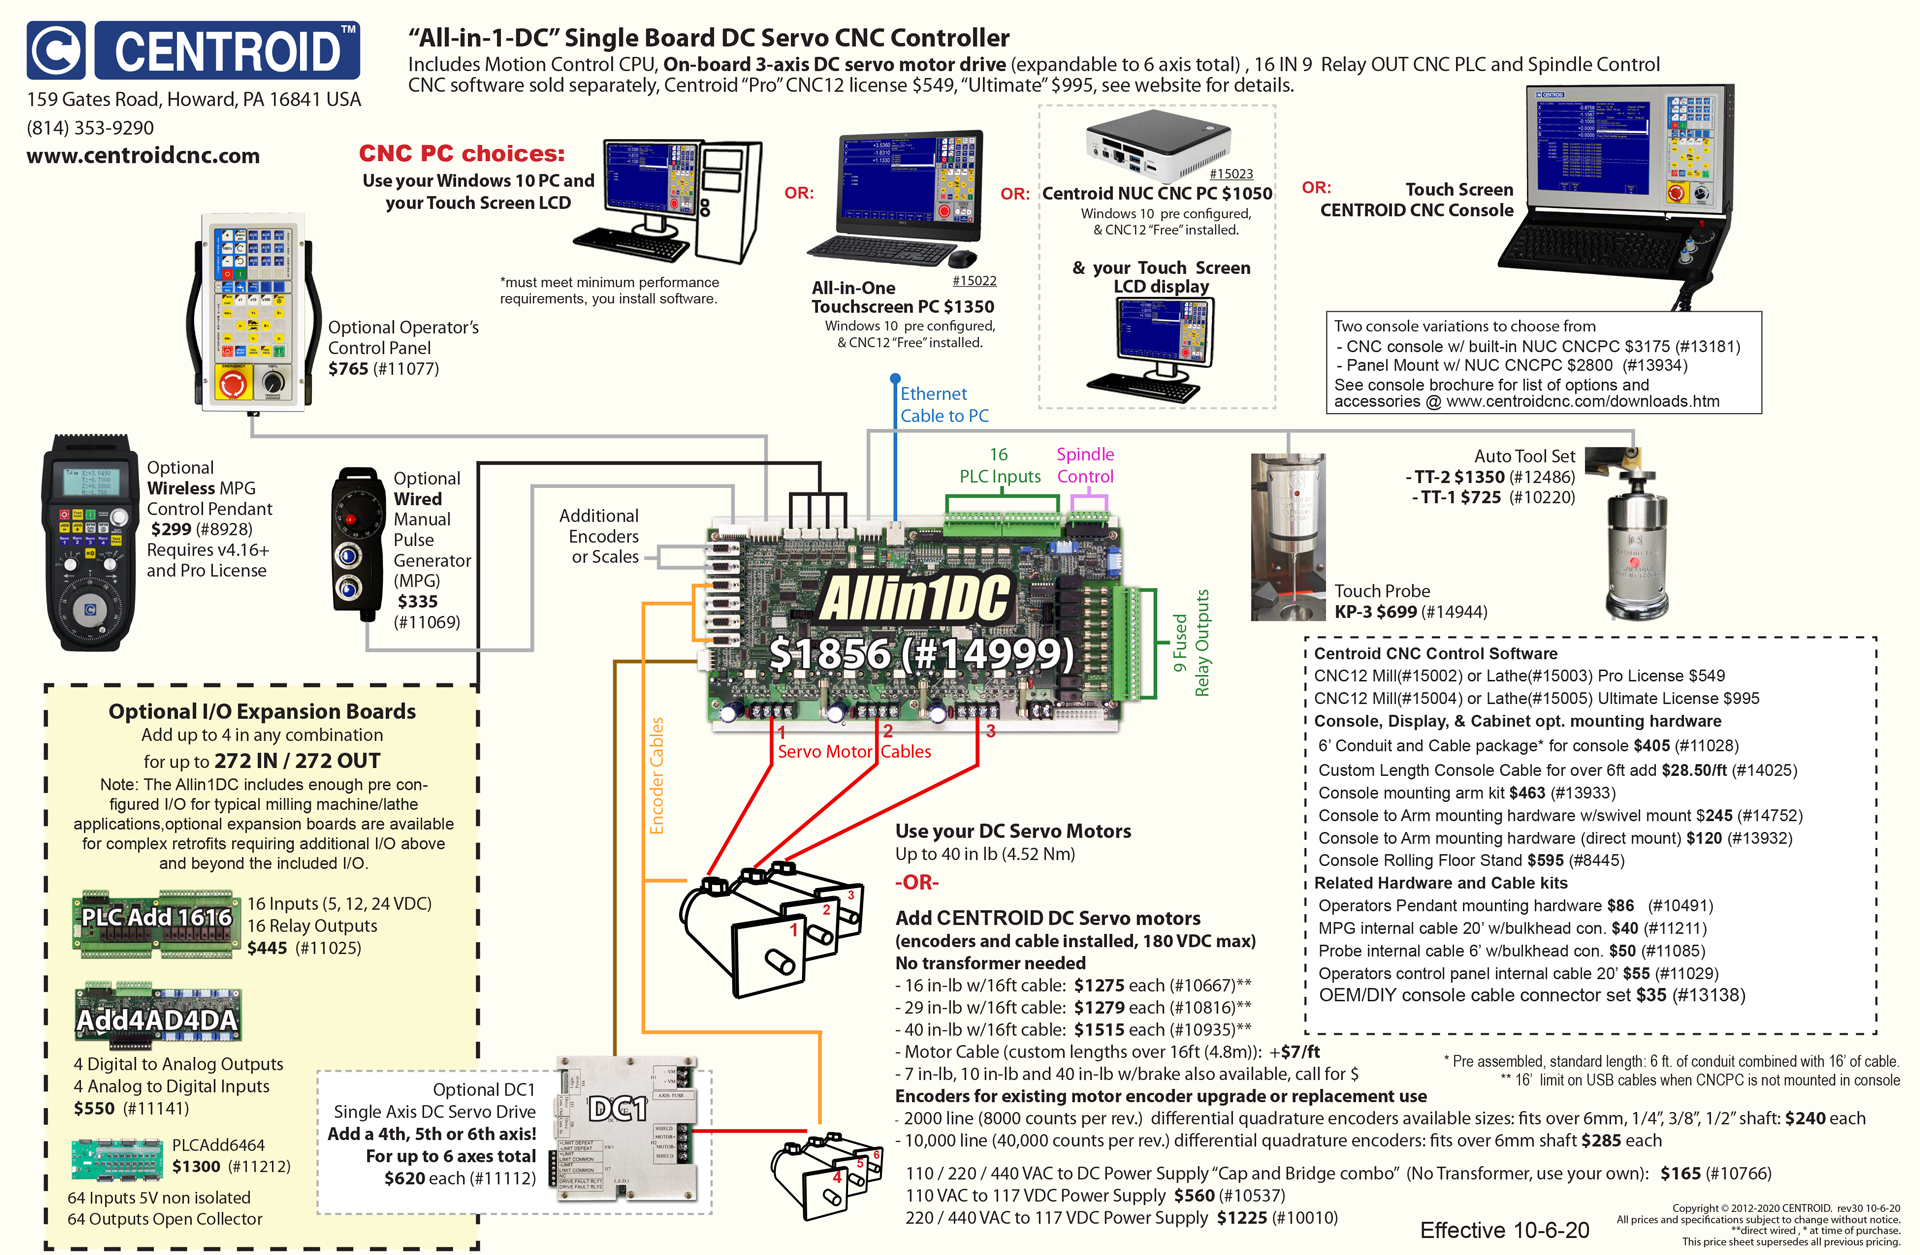 Allin1dc single board cnc controller for dc servos